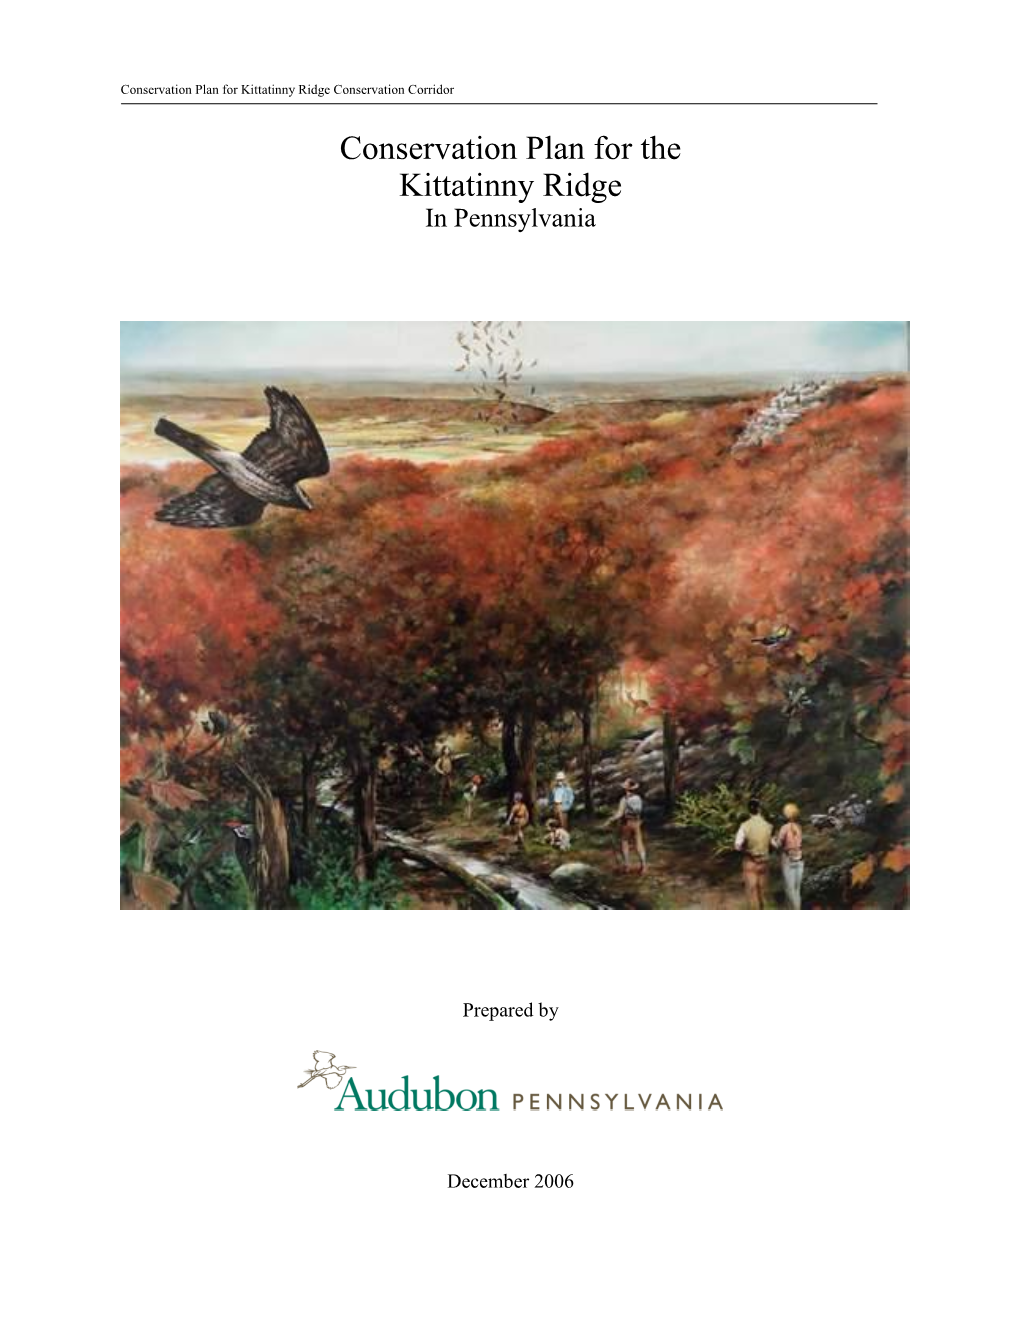 Conservation Plan for the Kittatinny Ridge in Pennsylvania